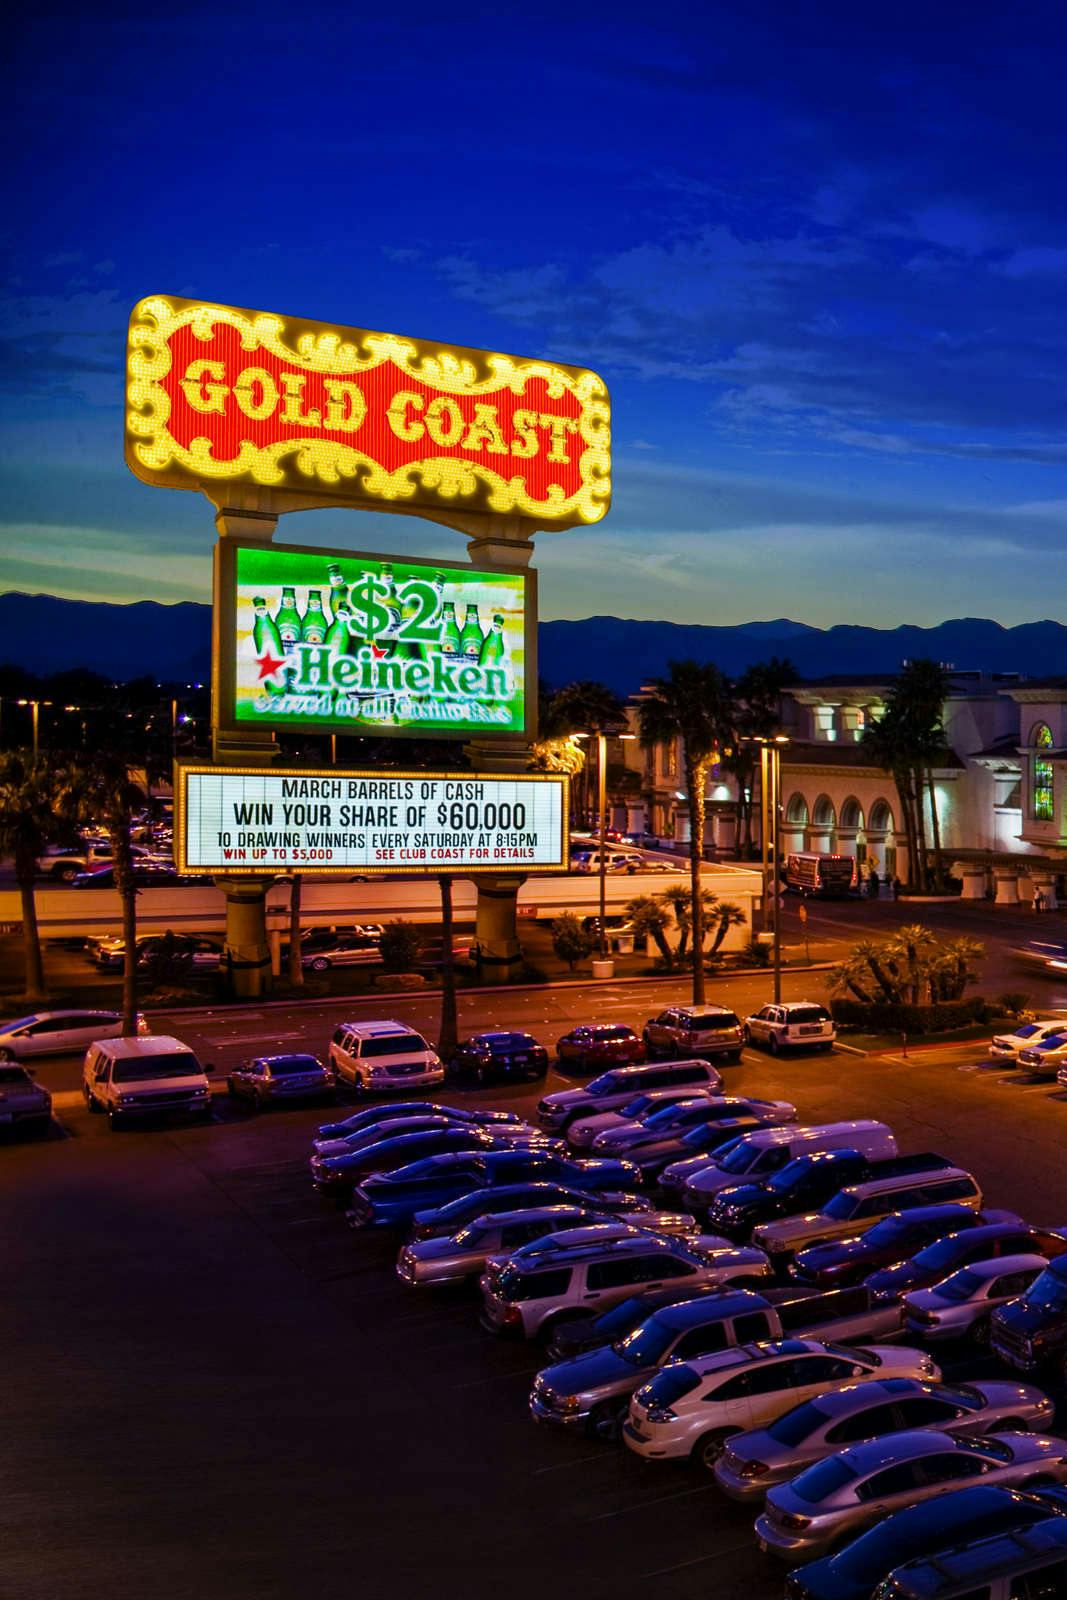 the gold coast hotel and casino